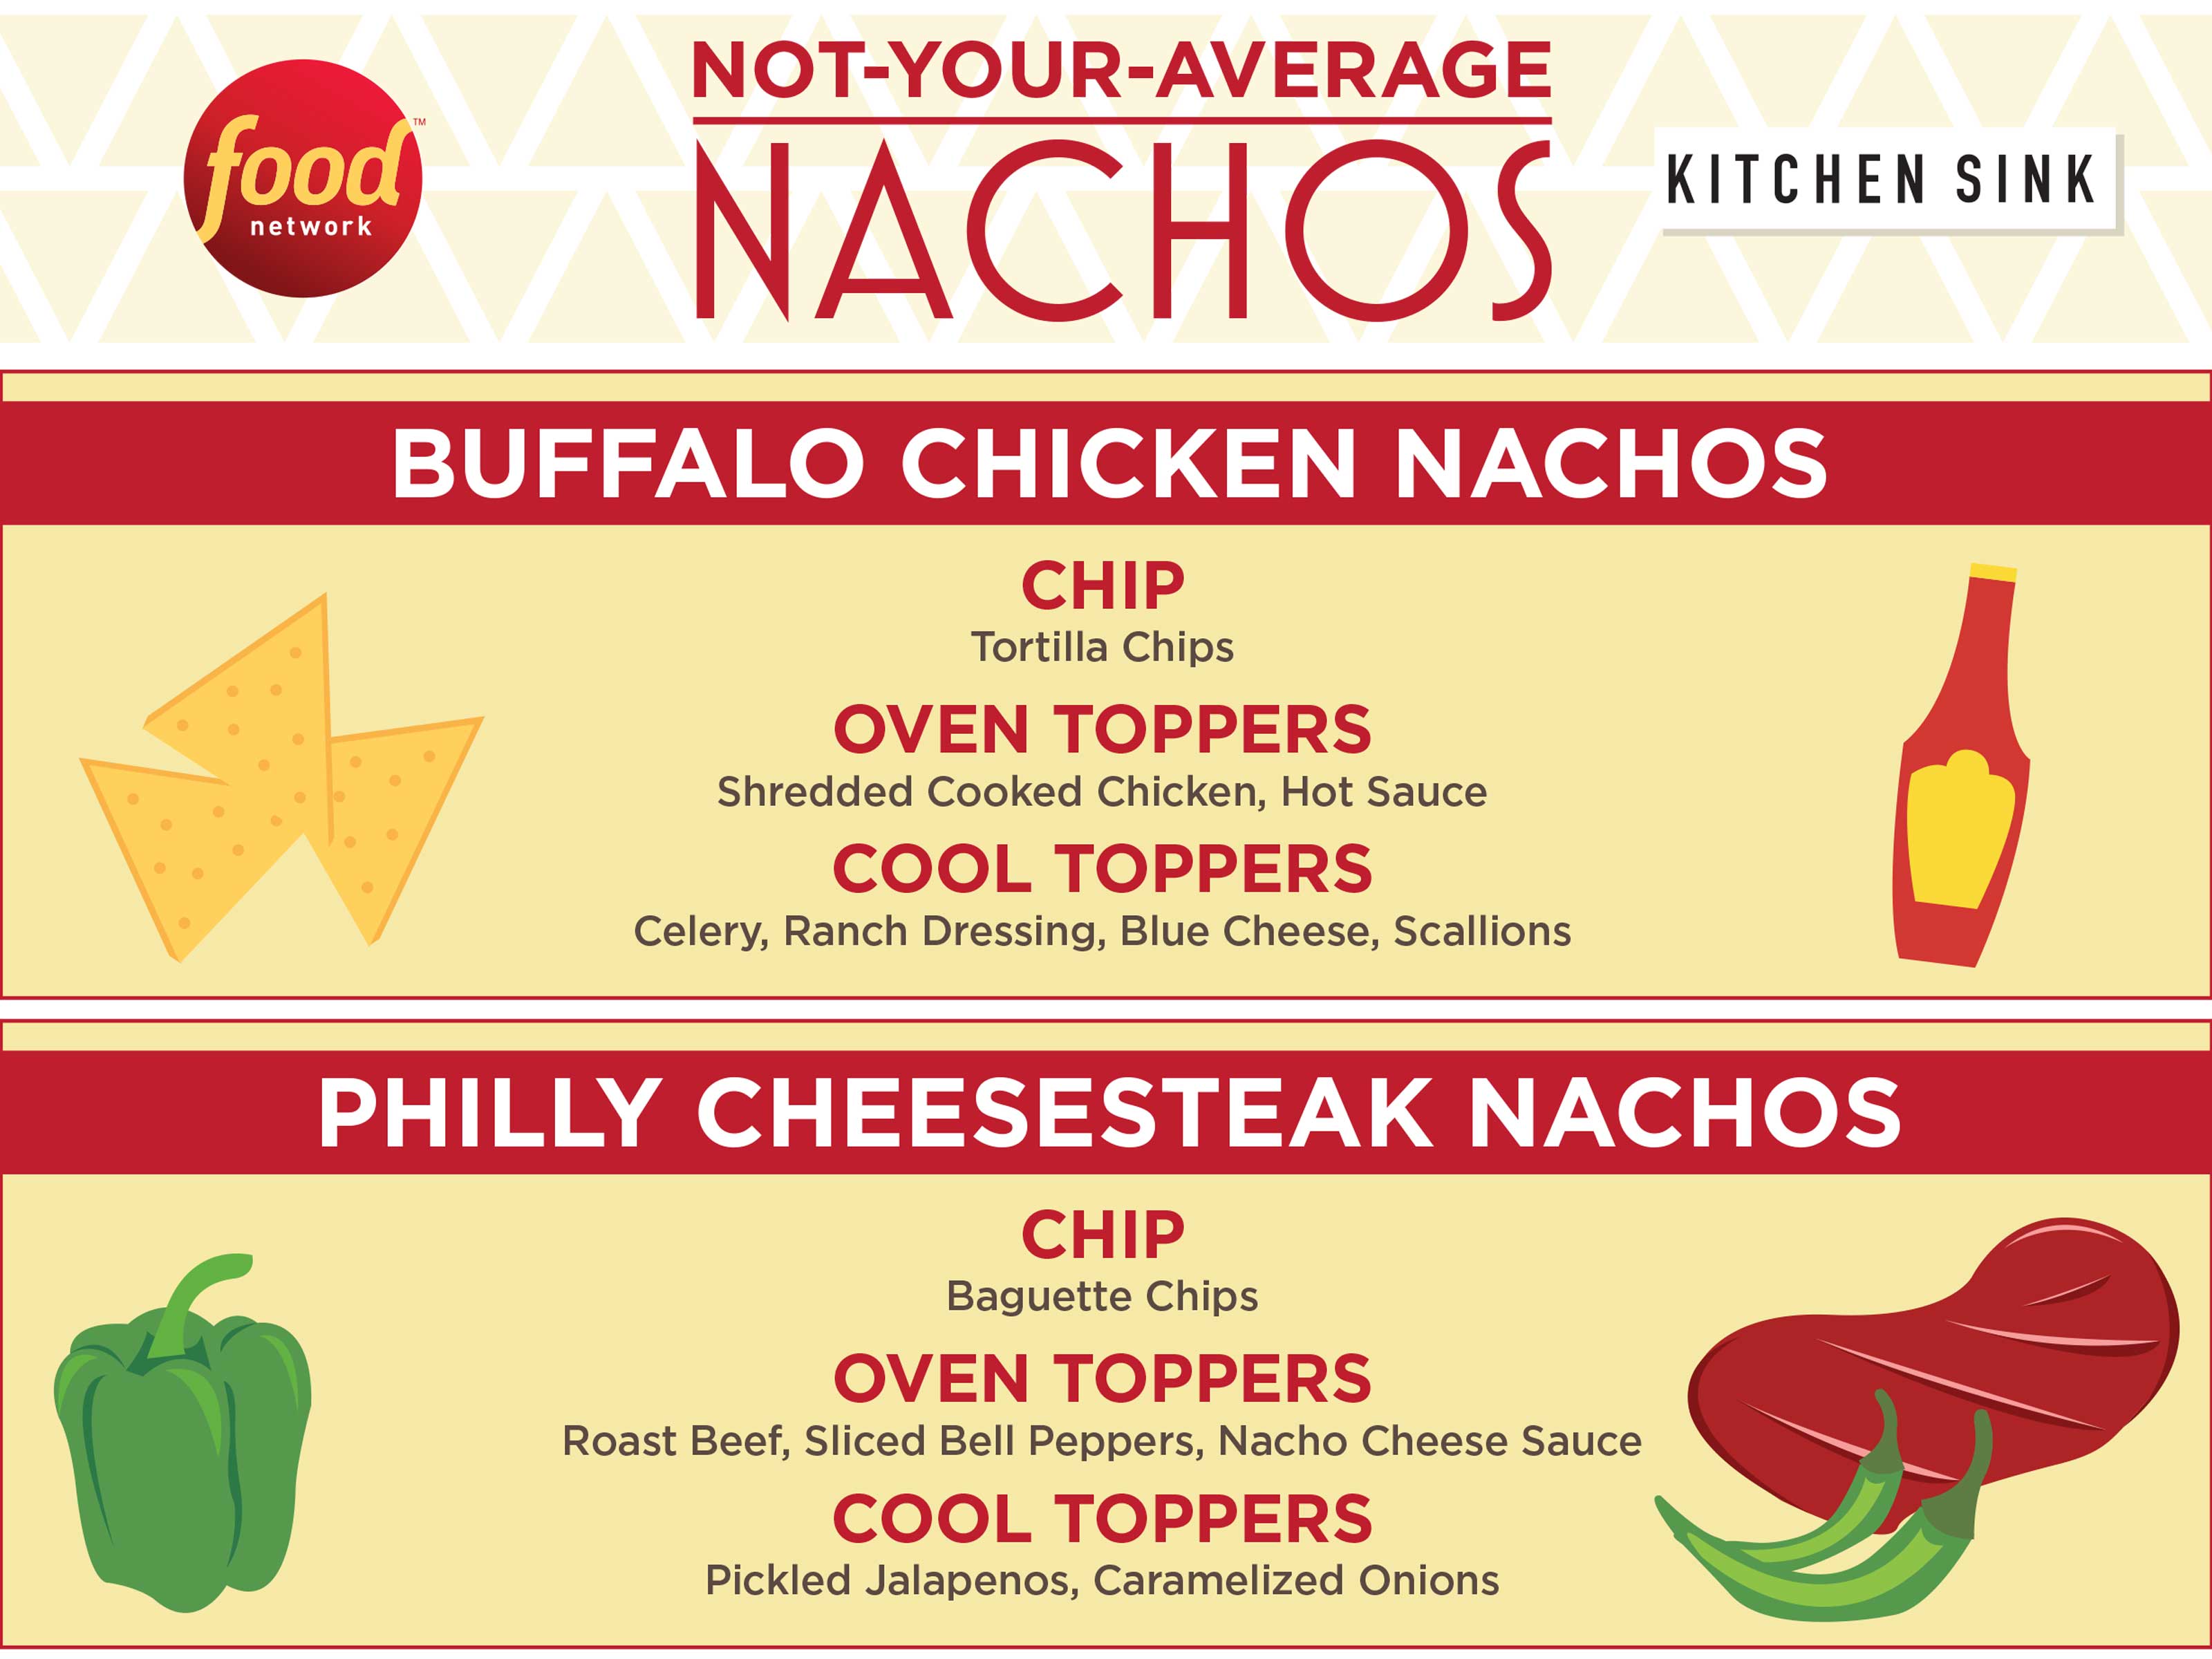 Not-Your-Average Nachos